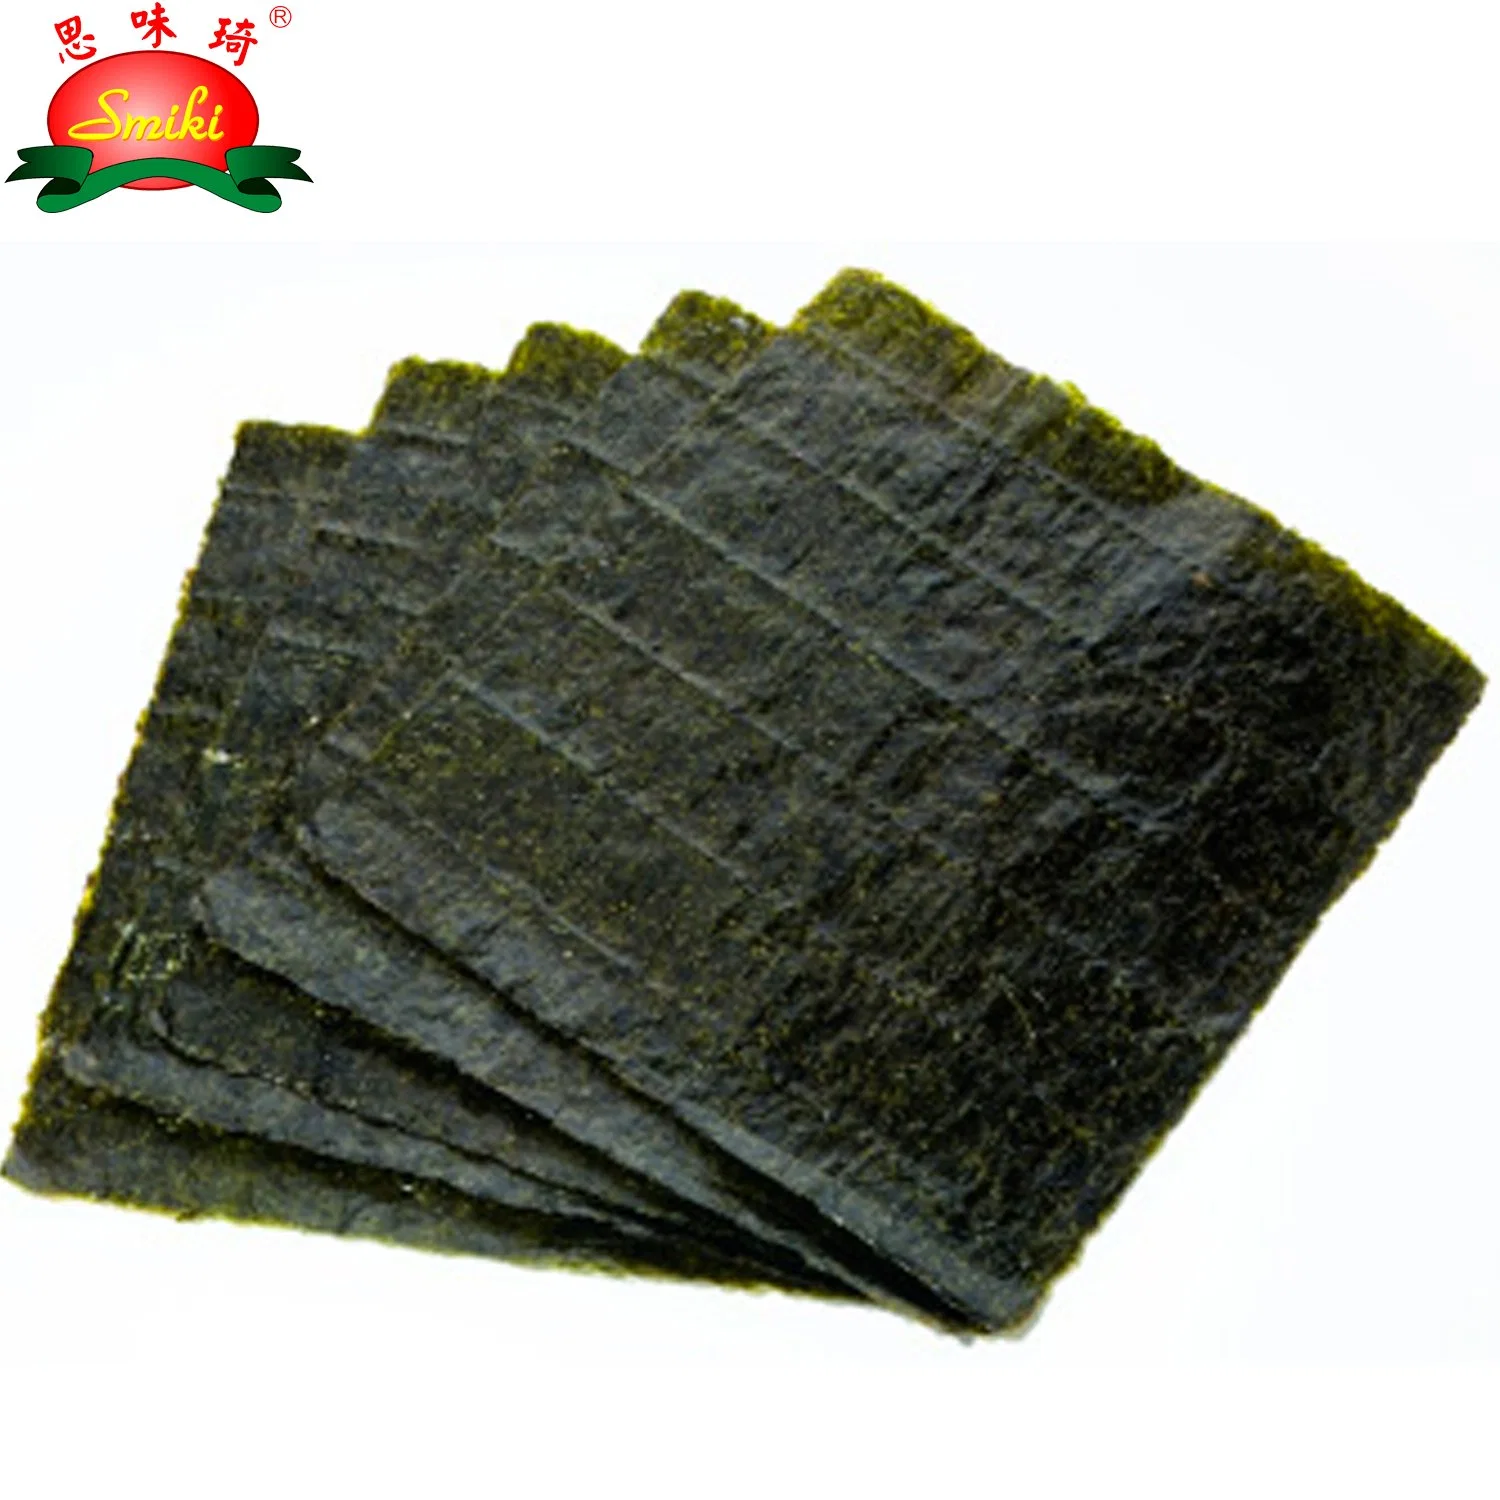 Smiki Brand Roasted Sushi Nori Seaweed Paper with Brc, FDA, HACCP